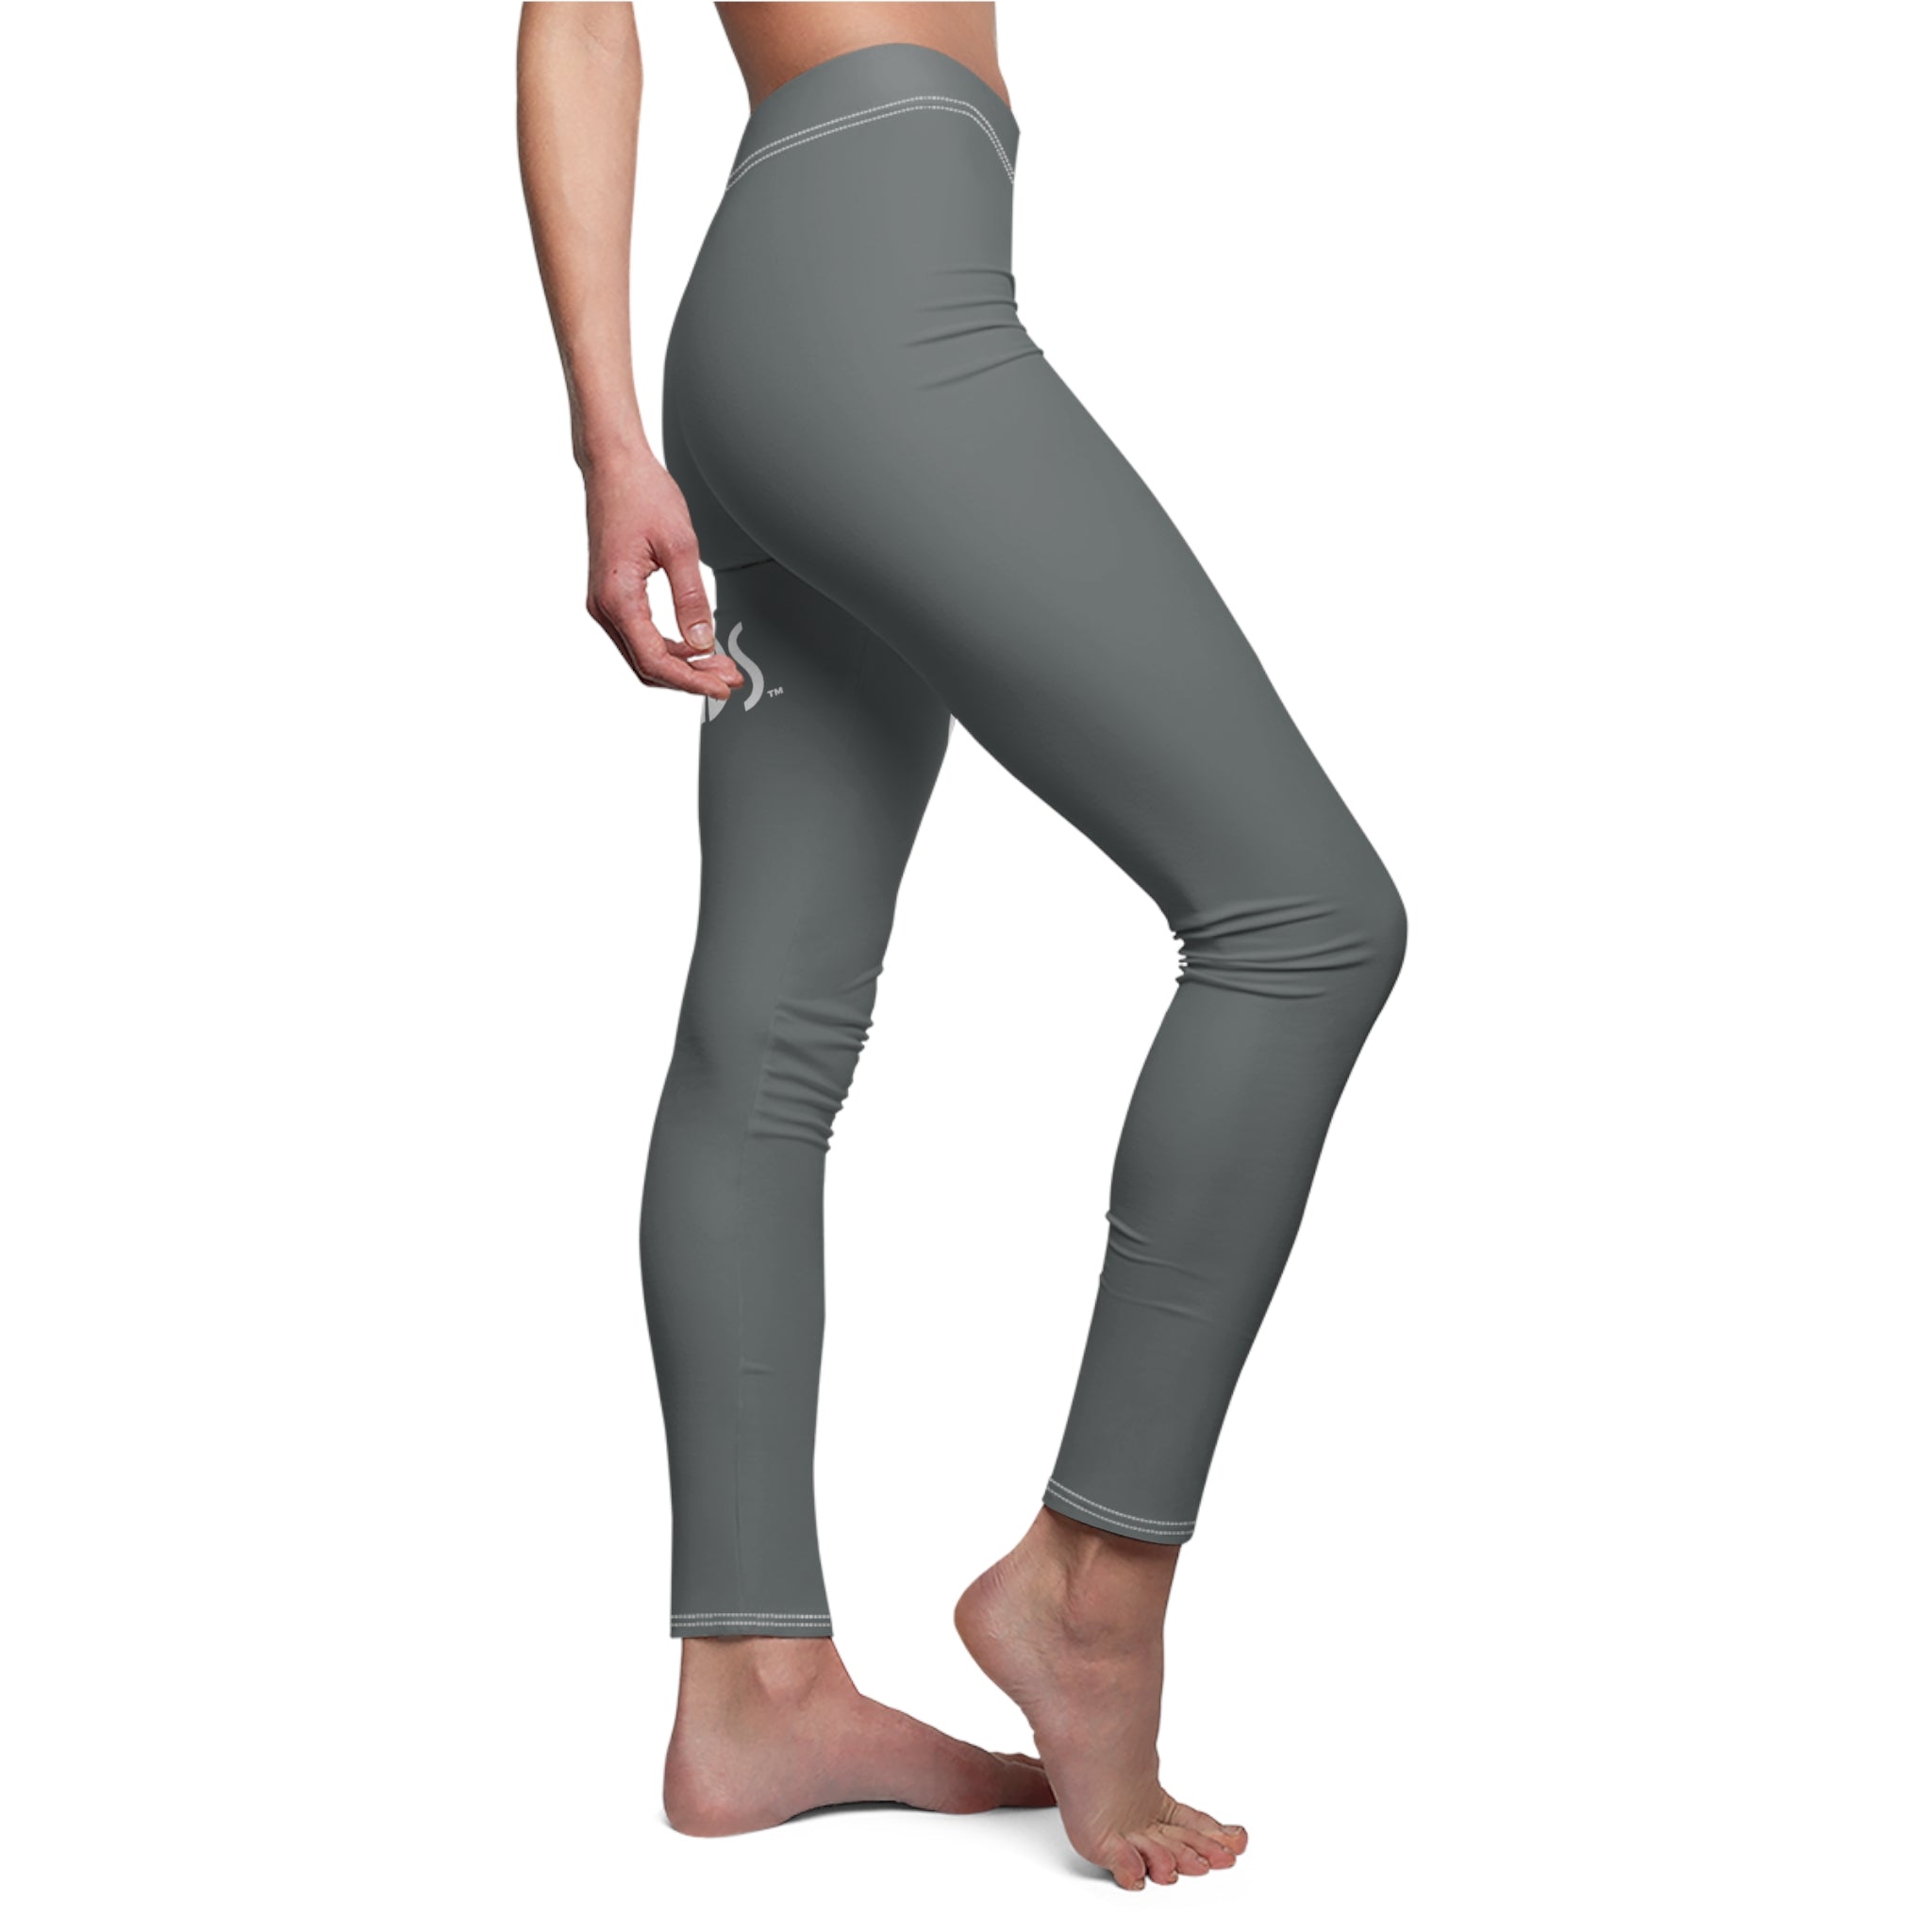 CombinedMinds Women's Cut & Sew Casual Leggings-Dark Grey/White Logo